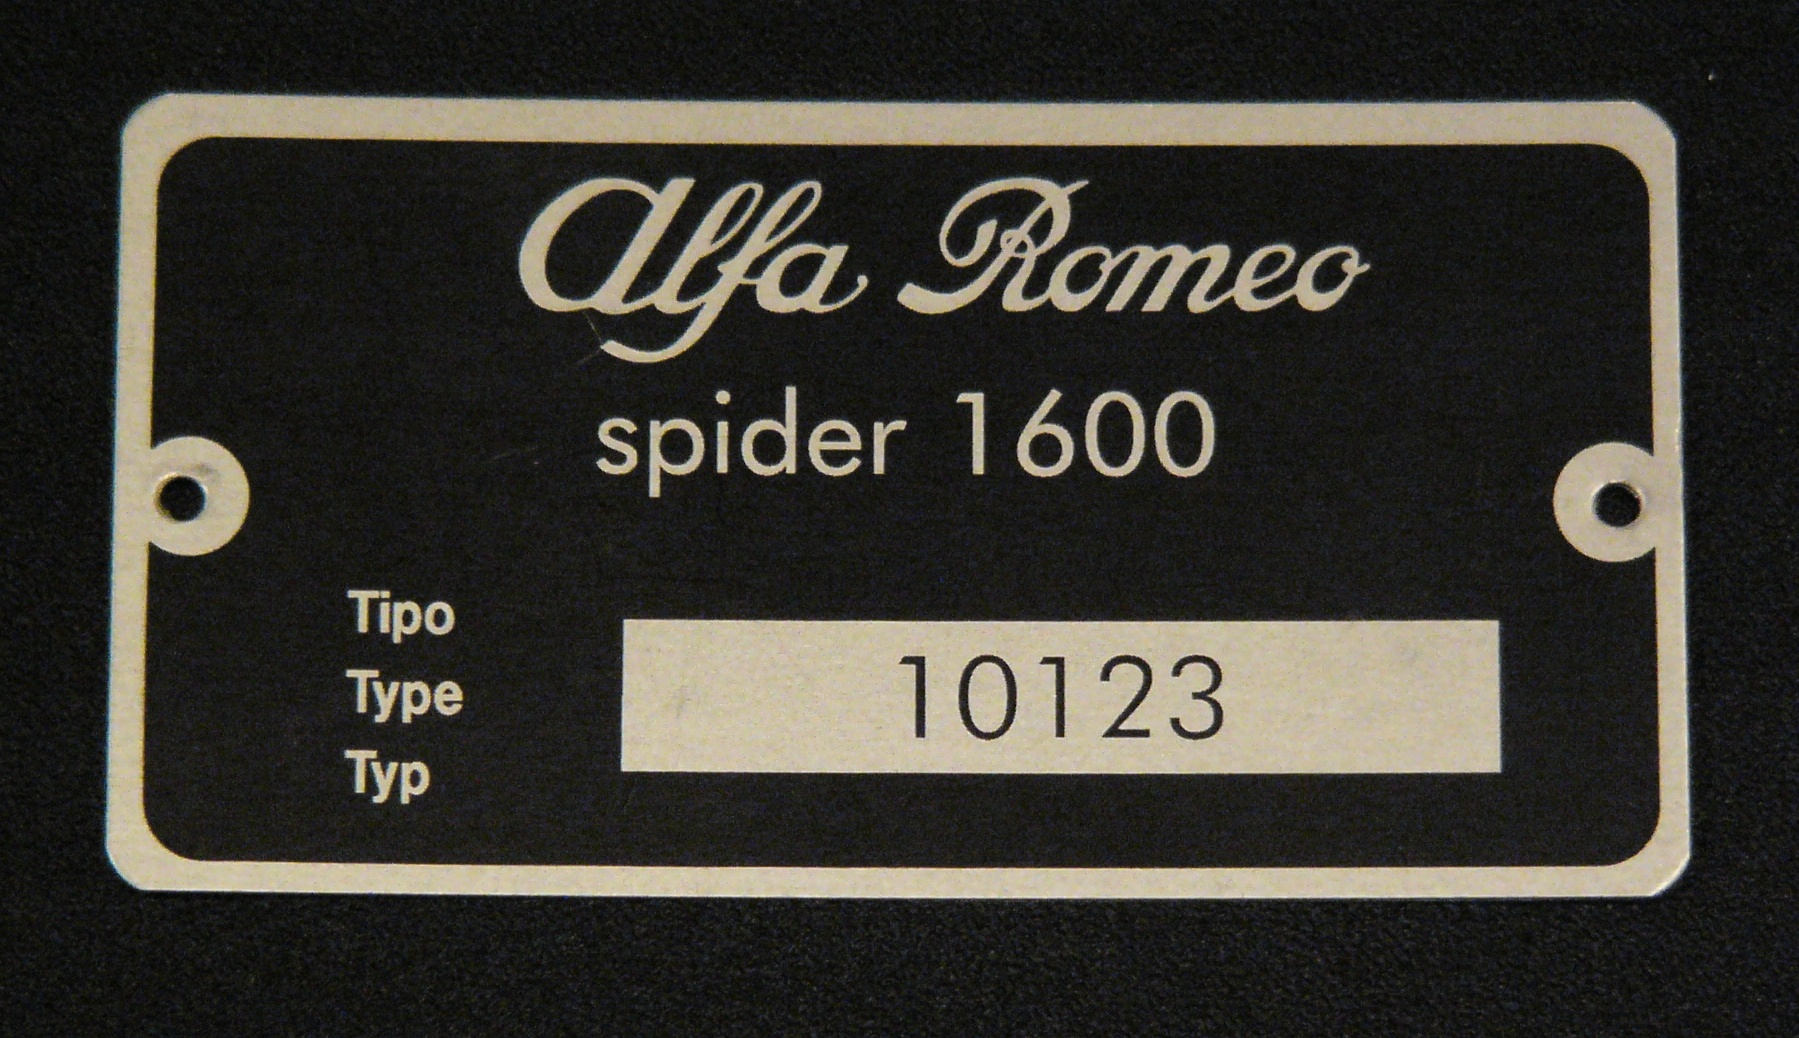 Alfa Romeo data plate #ardp104